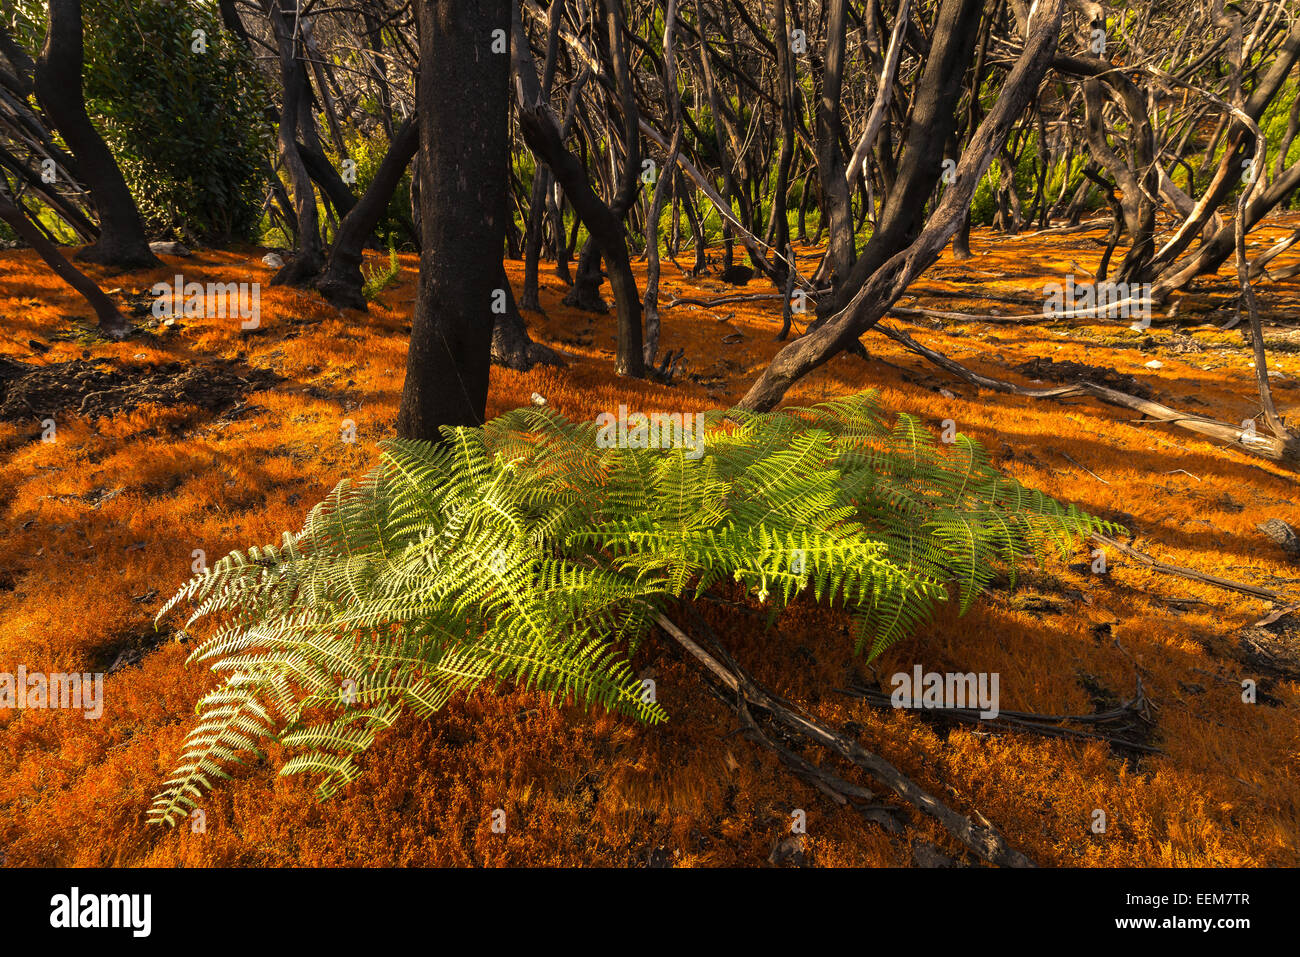 Spain, Canary Islands, Parc Nacional de Garajonay, Fern in forest Stock Photo